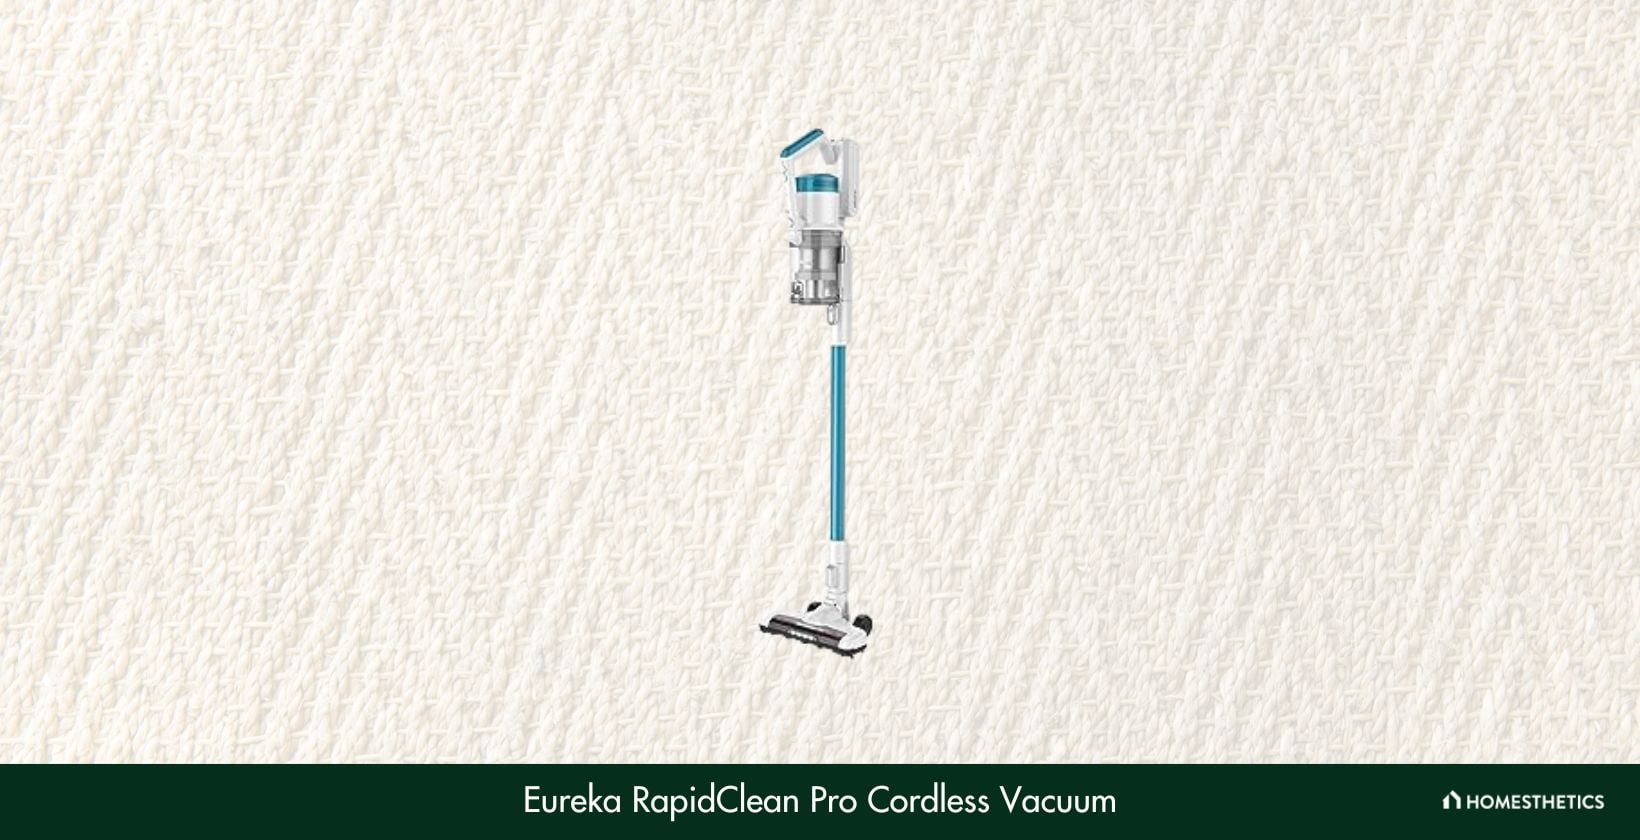 Eureka RapidClean Pro Cordless Vacuum